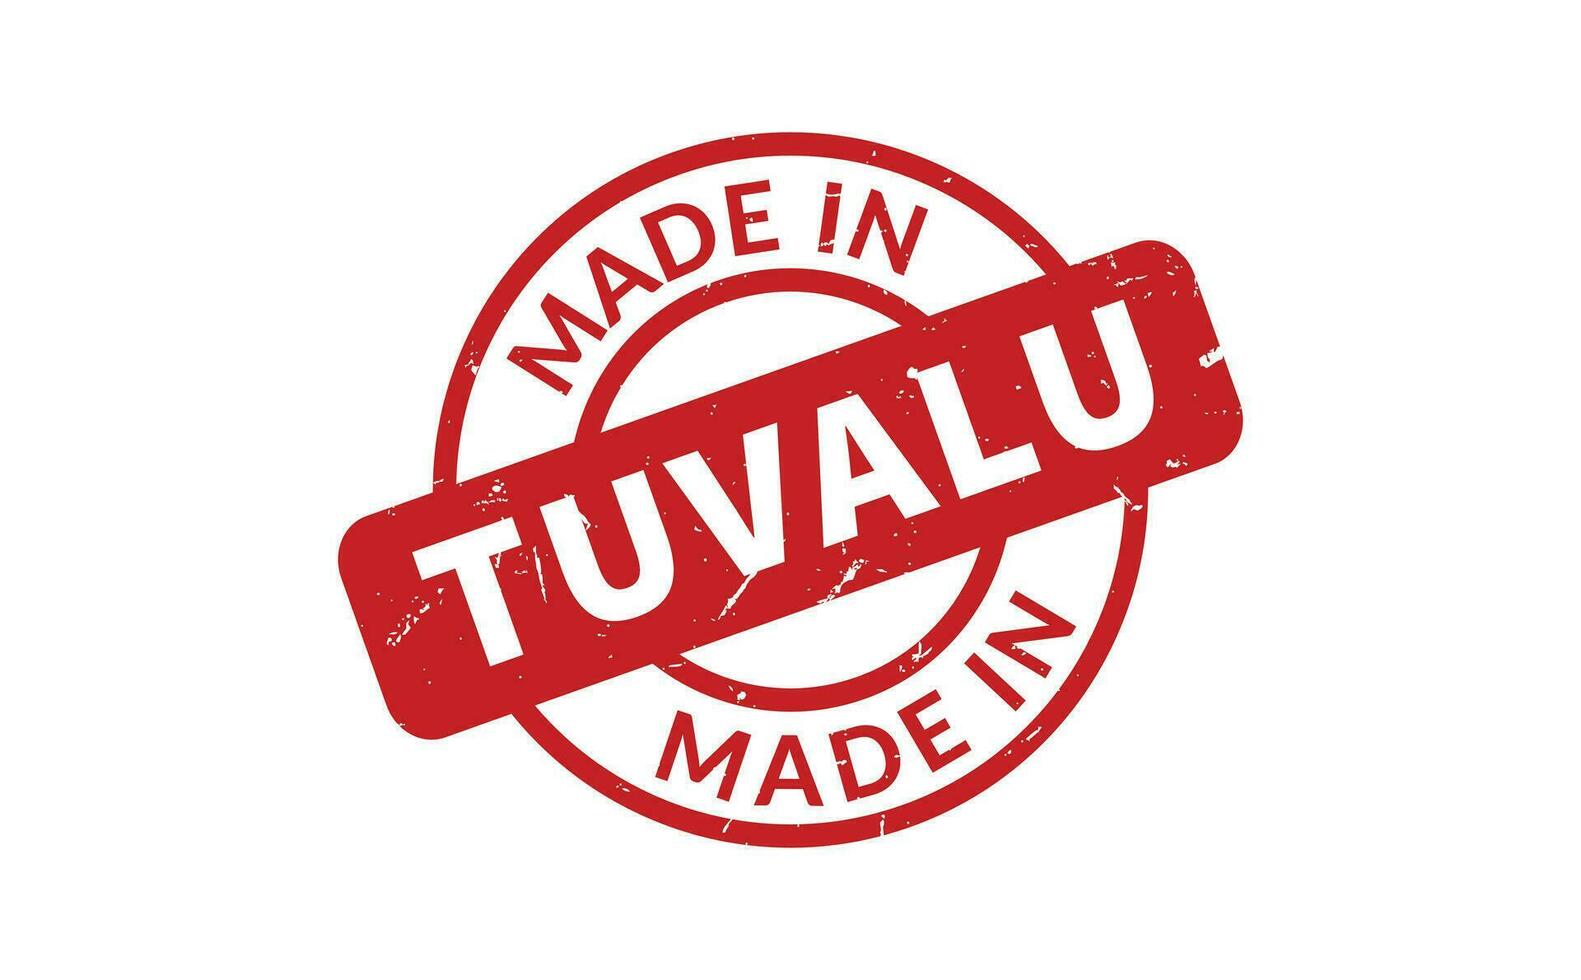 gemacht im Tuvalu Gummi Briefmarke vektor